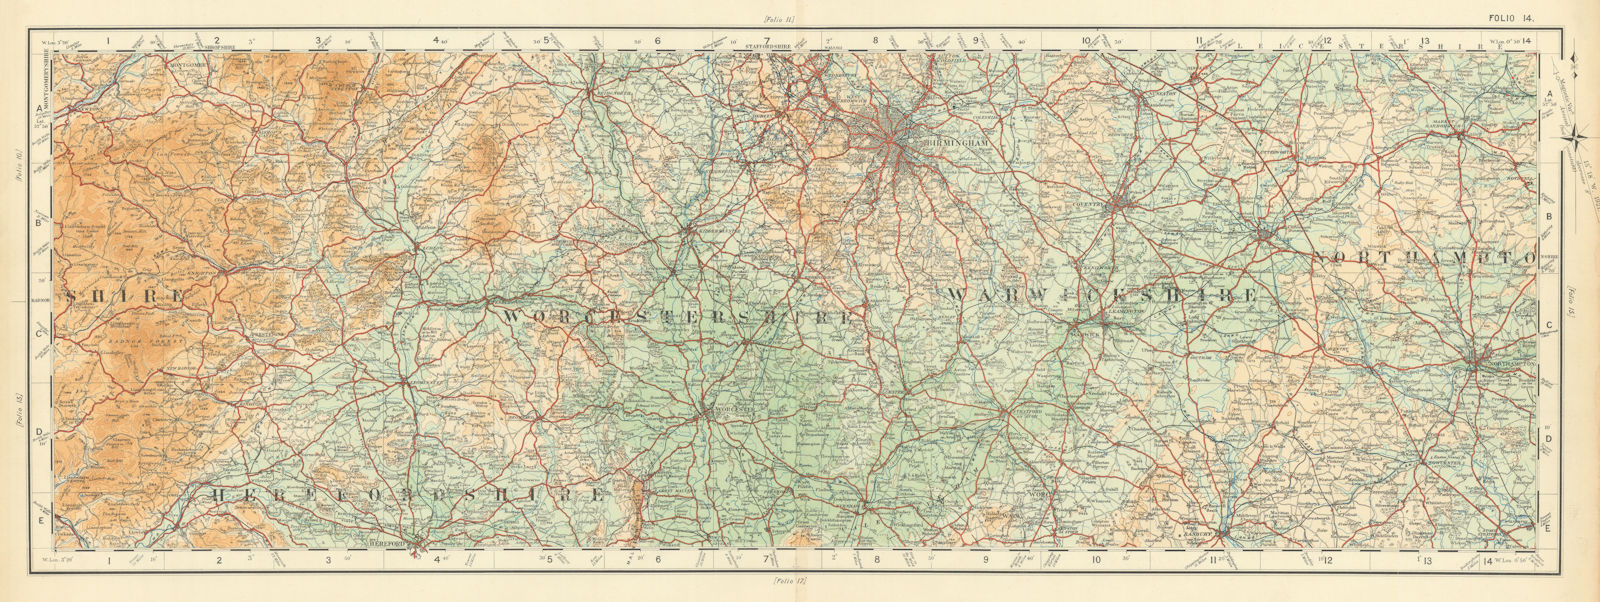 West Midlands Shropshire Hills Birmingham Northampton ORDNANCE SURVEY 1922 map